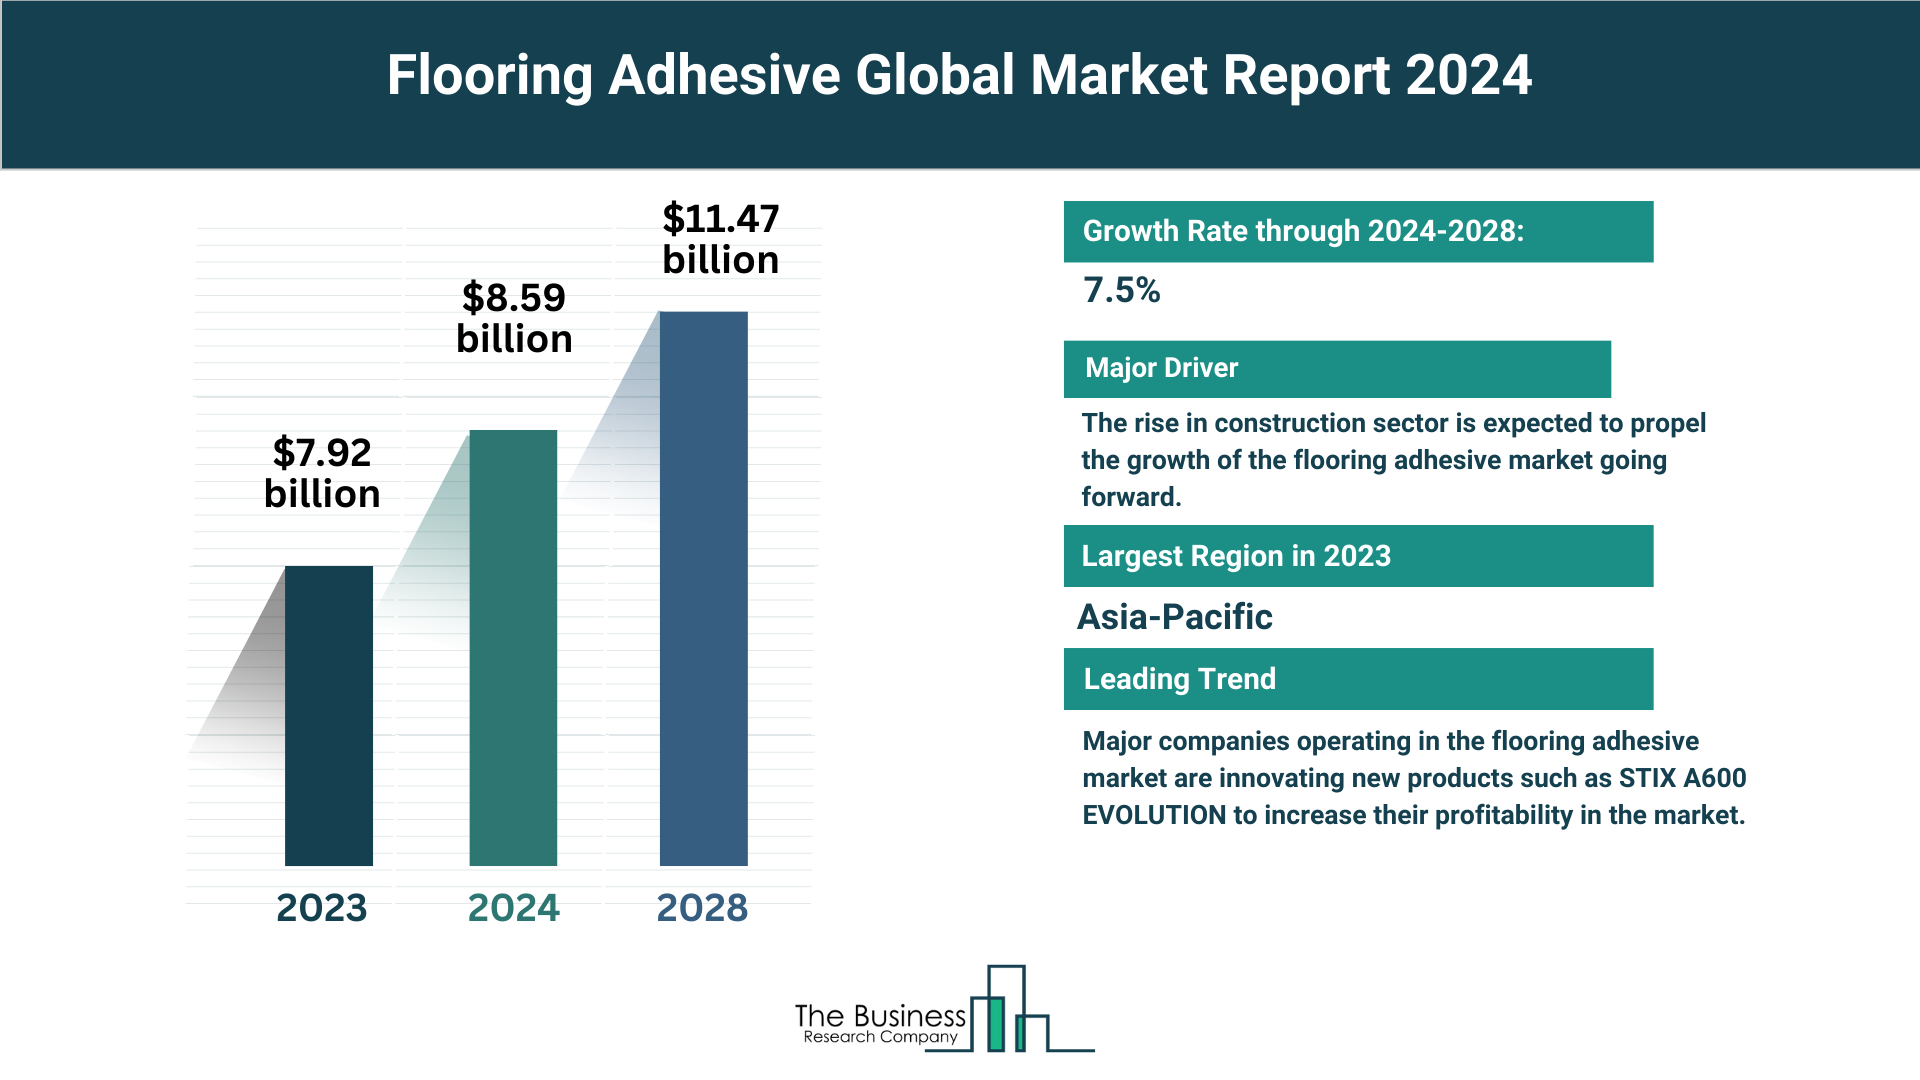 How Will Flooring Adhesive Market Grow Through 2024-2033?